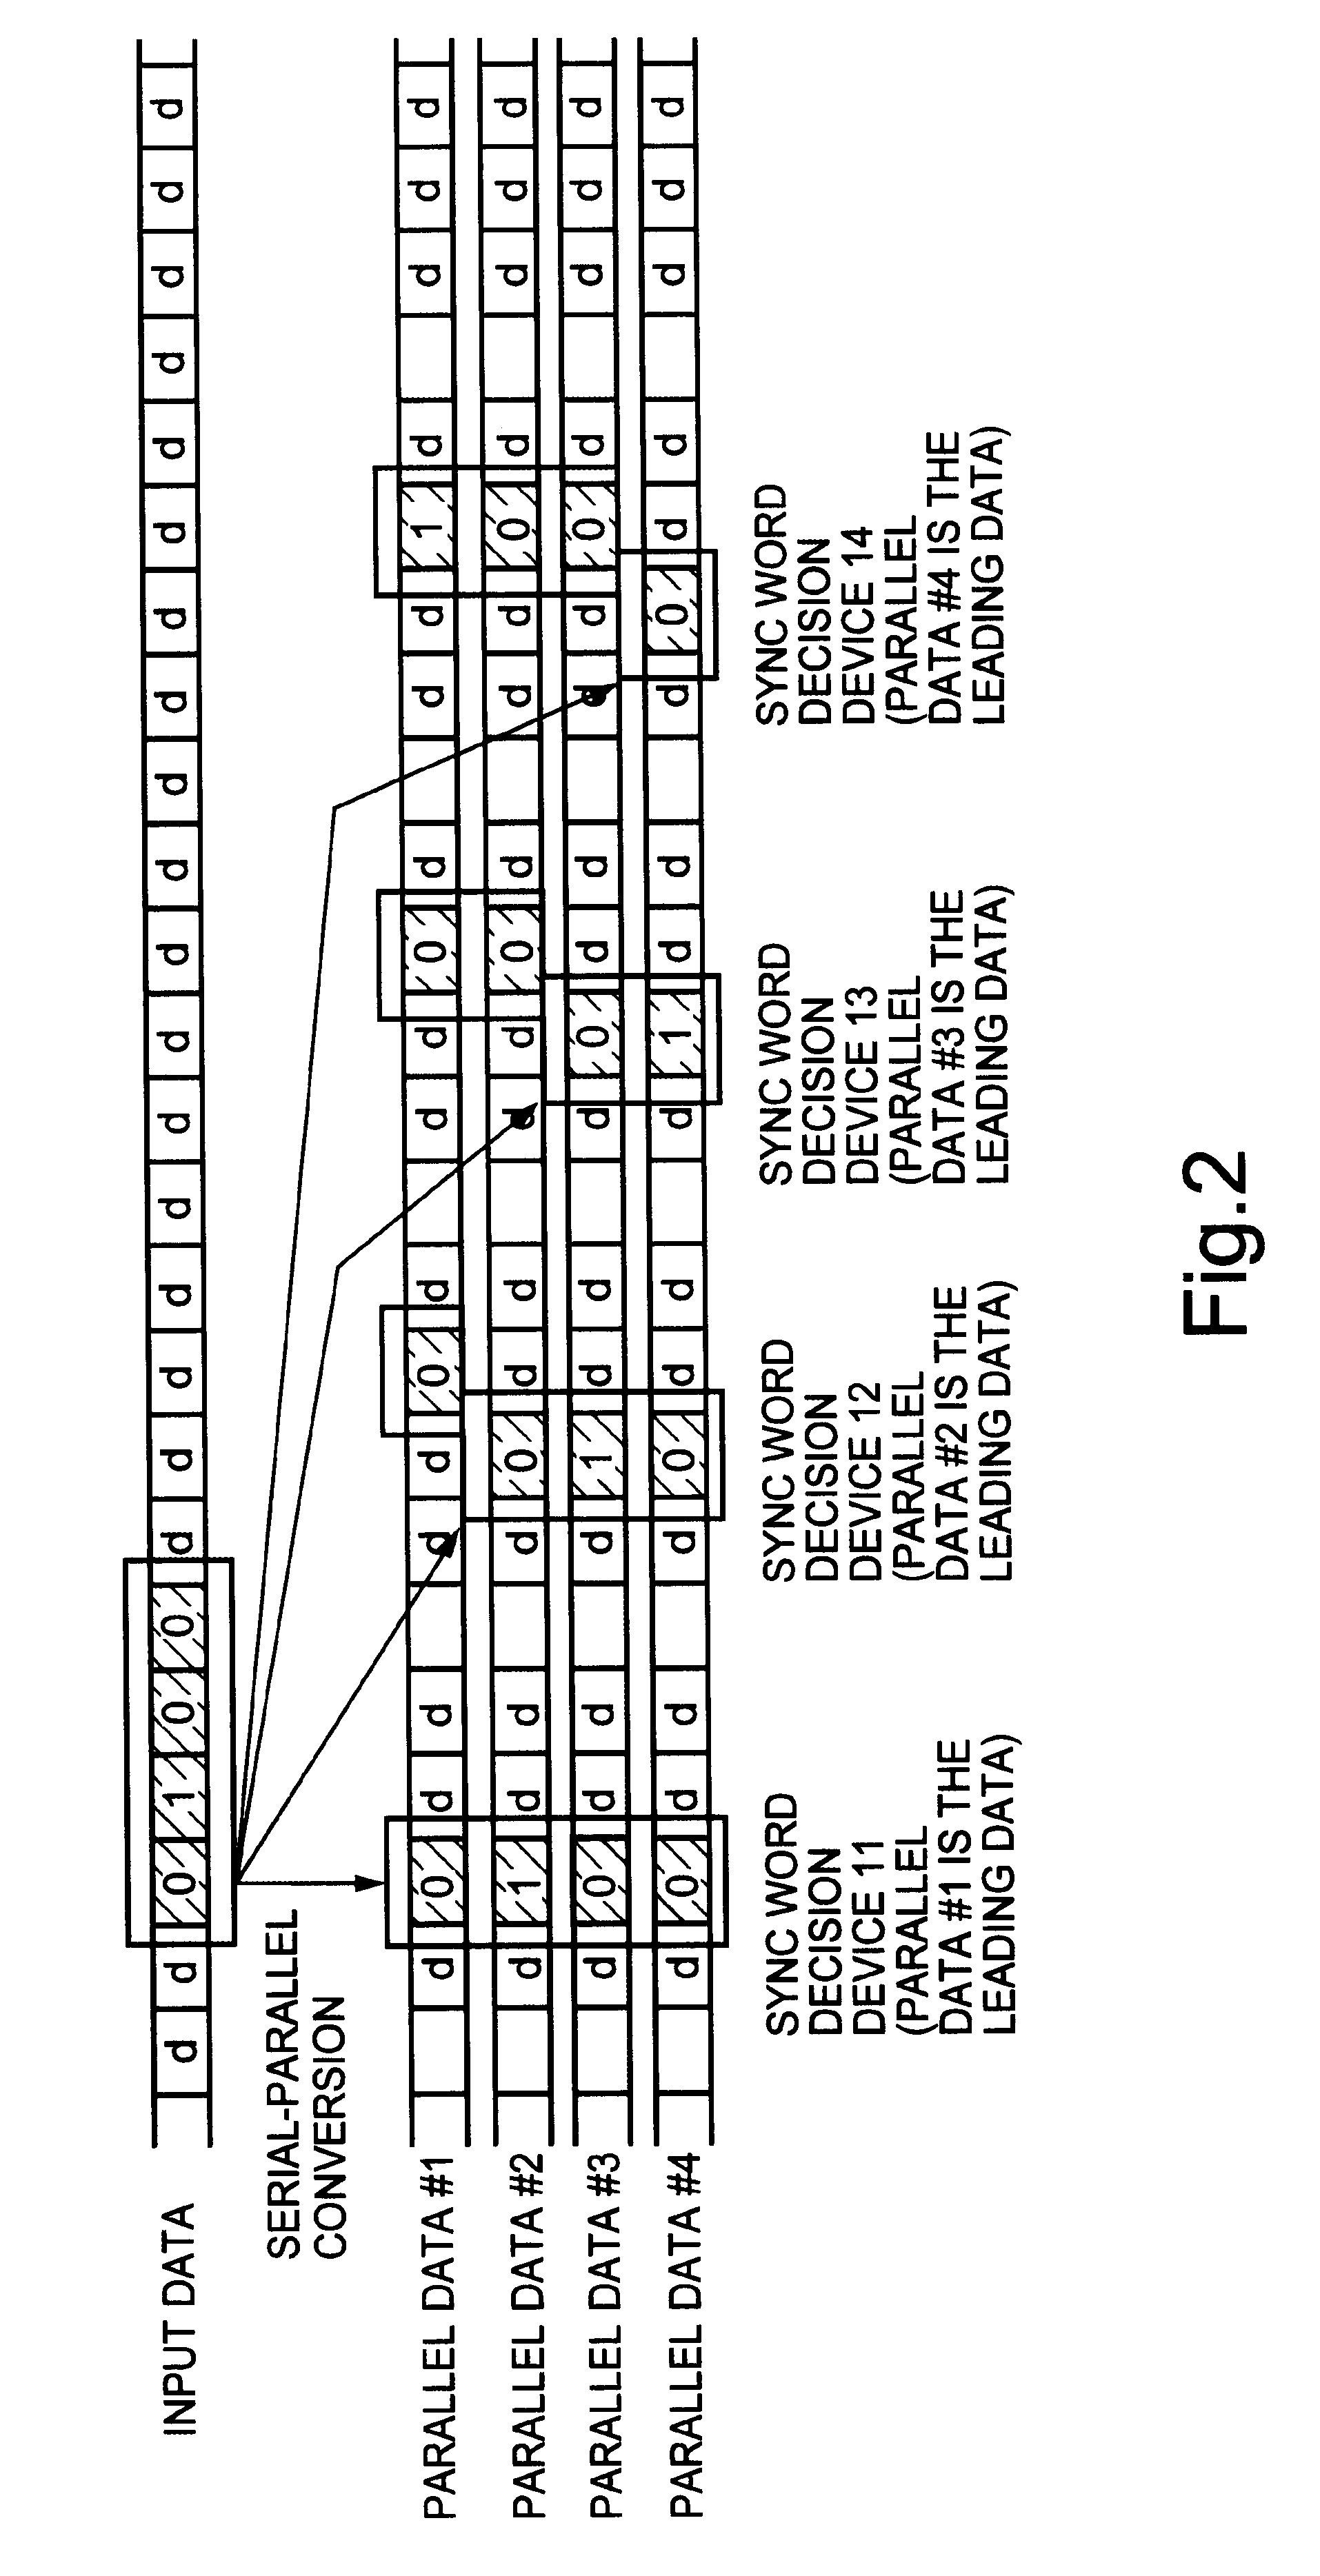 Method and apparatus for establishing frame synchronization